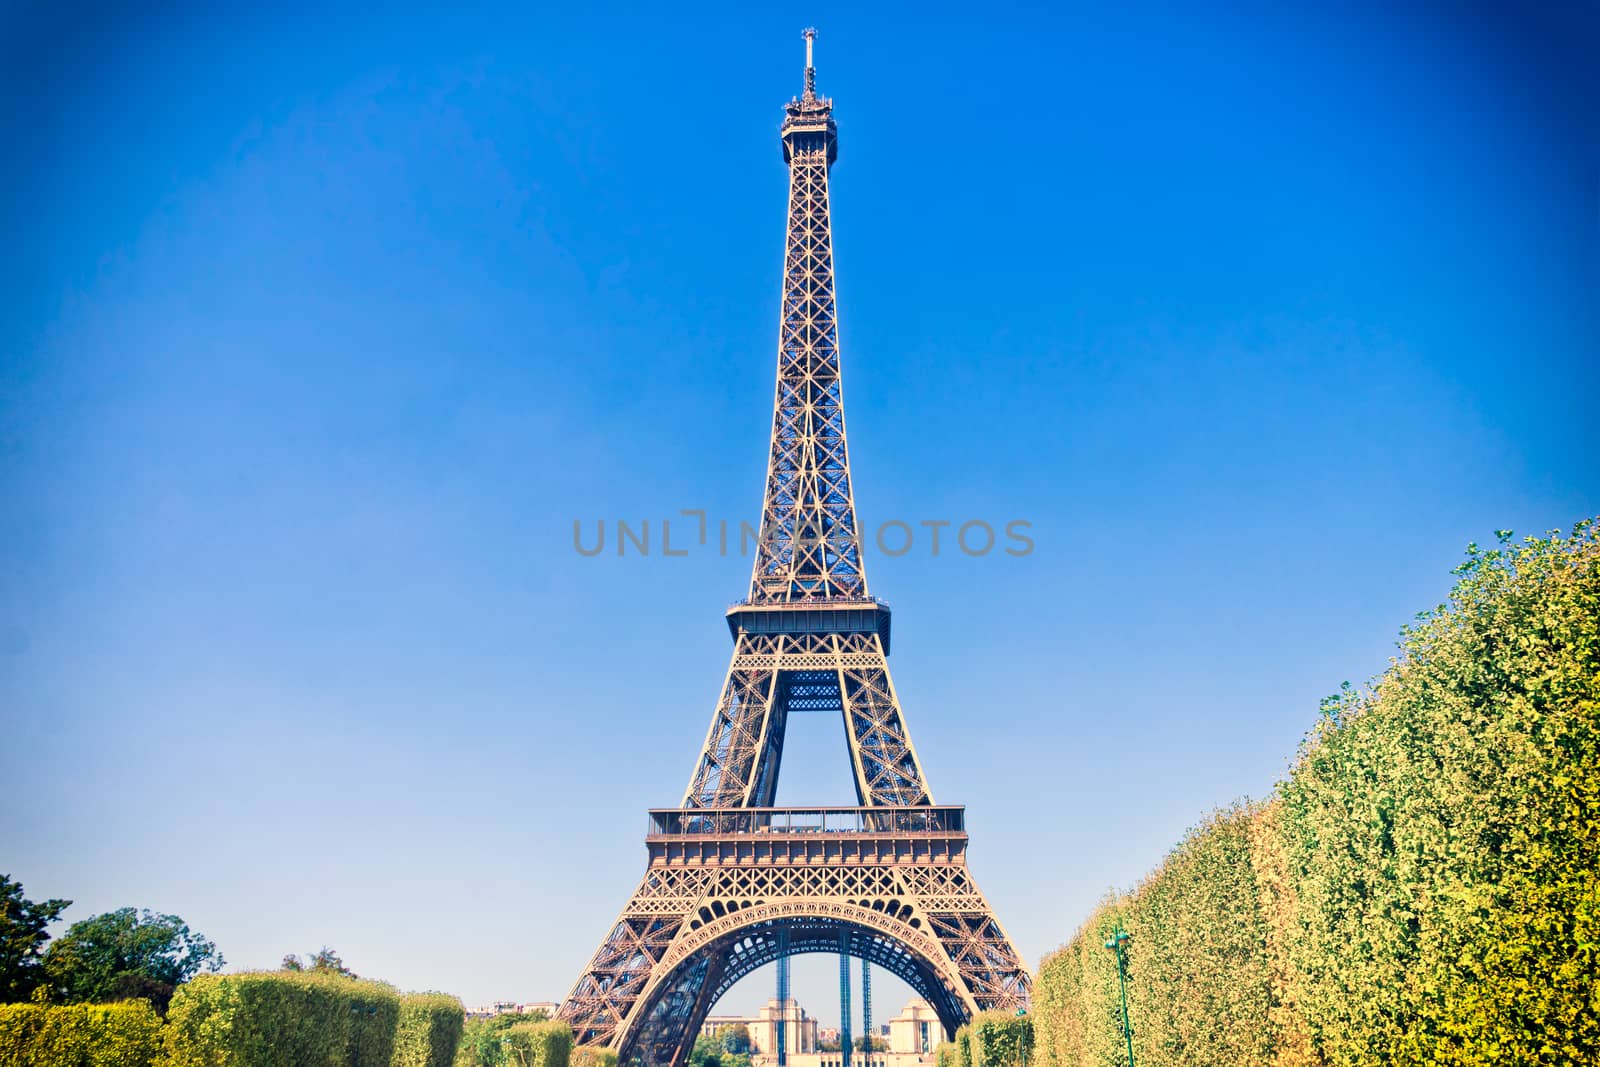 Eiffel Tower in Paris, France by gianliguori